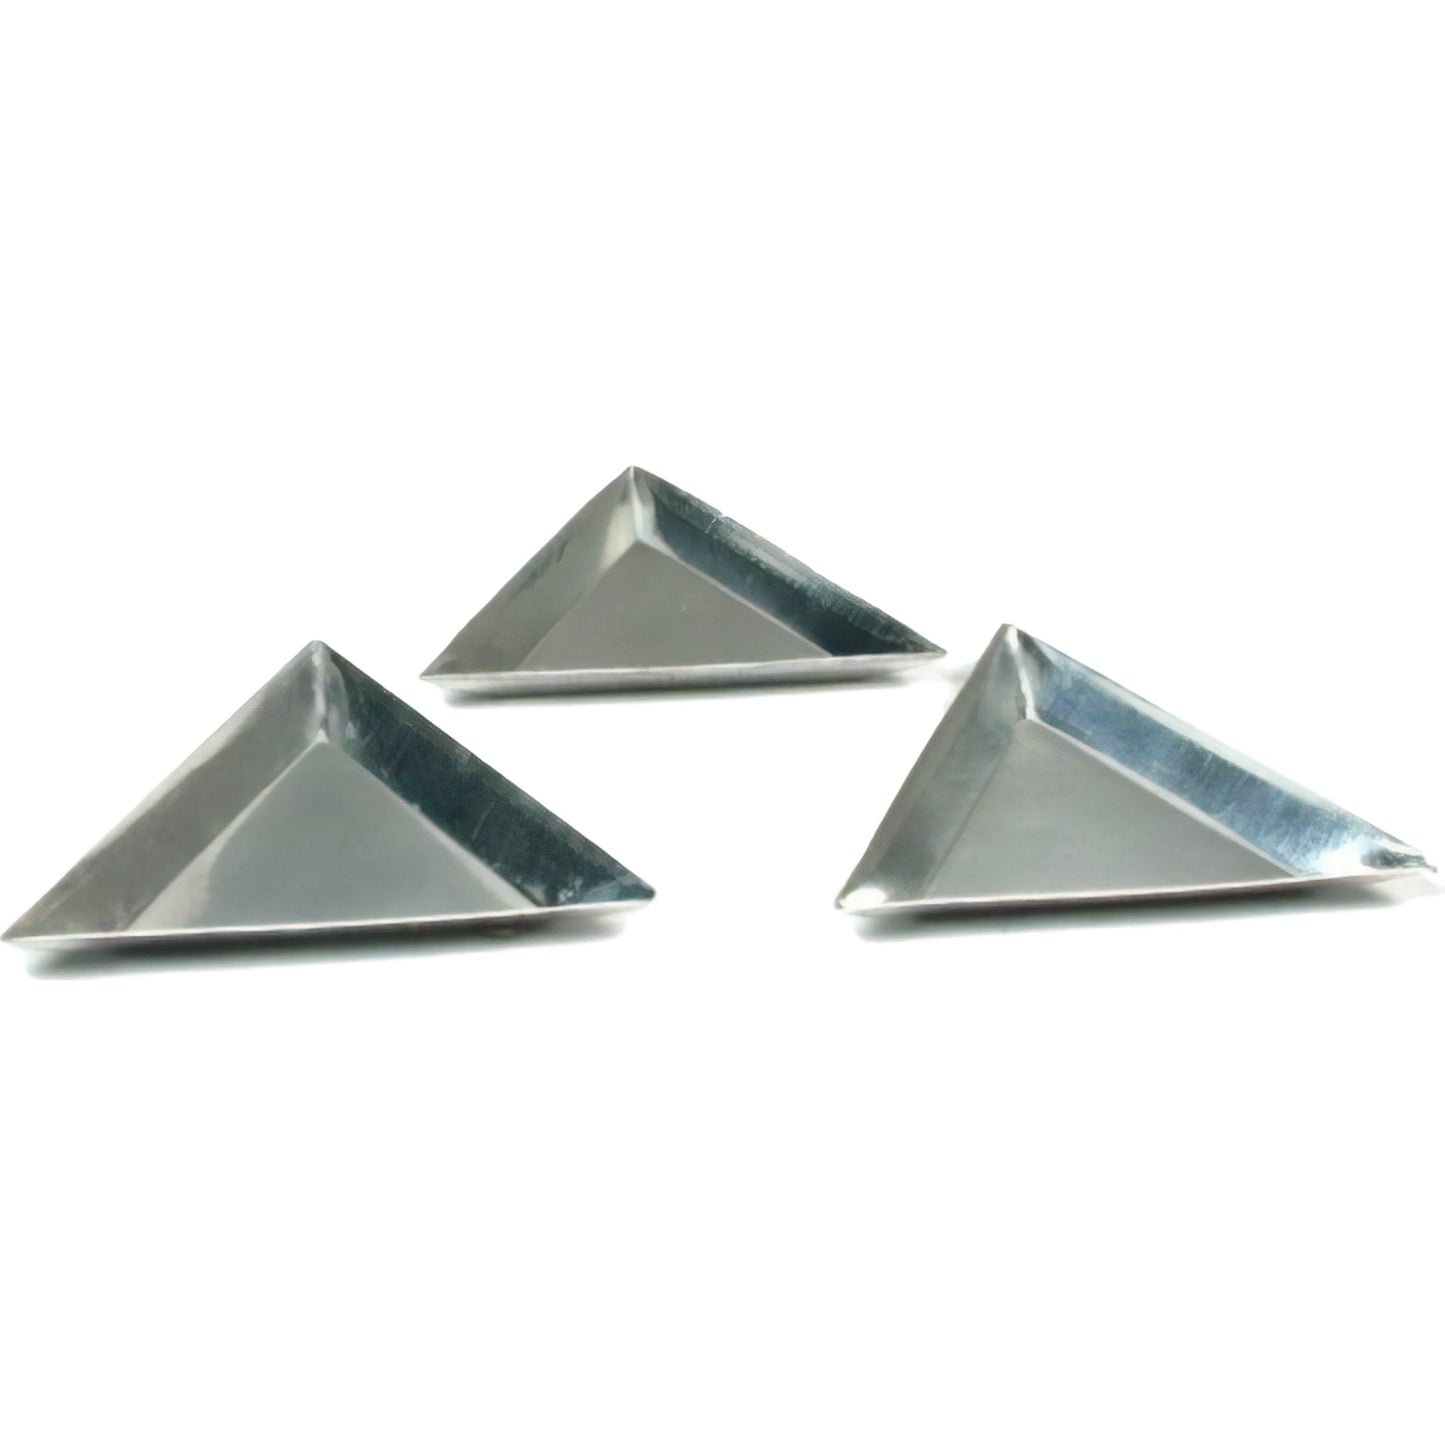 3 Triangular Shovel Scoop Diamond Beads Gemstones Pearl Jewelry Pick up Tool